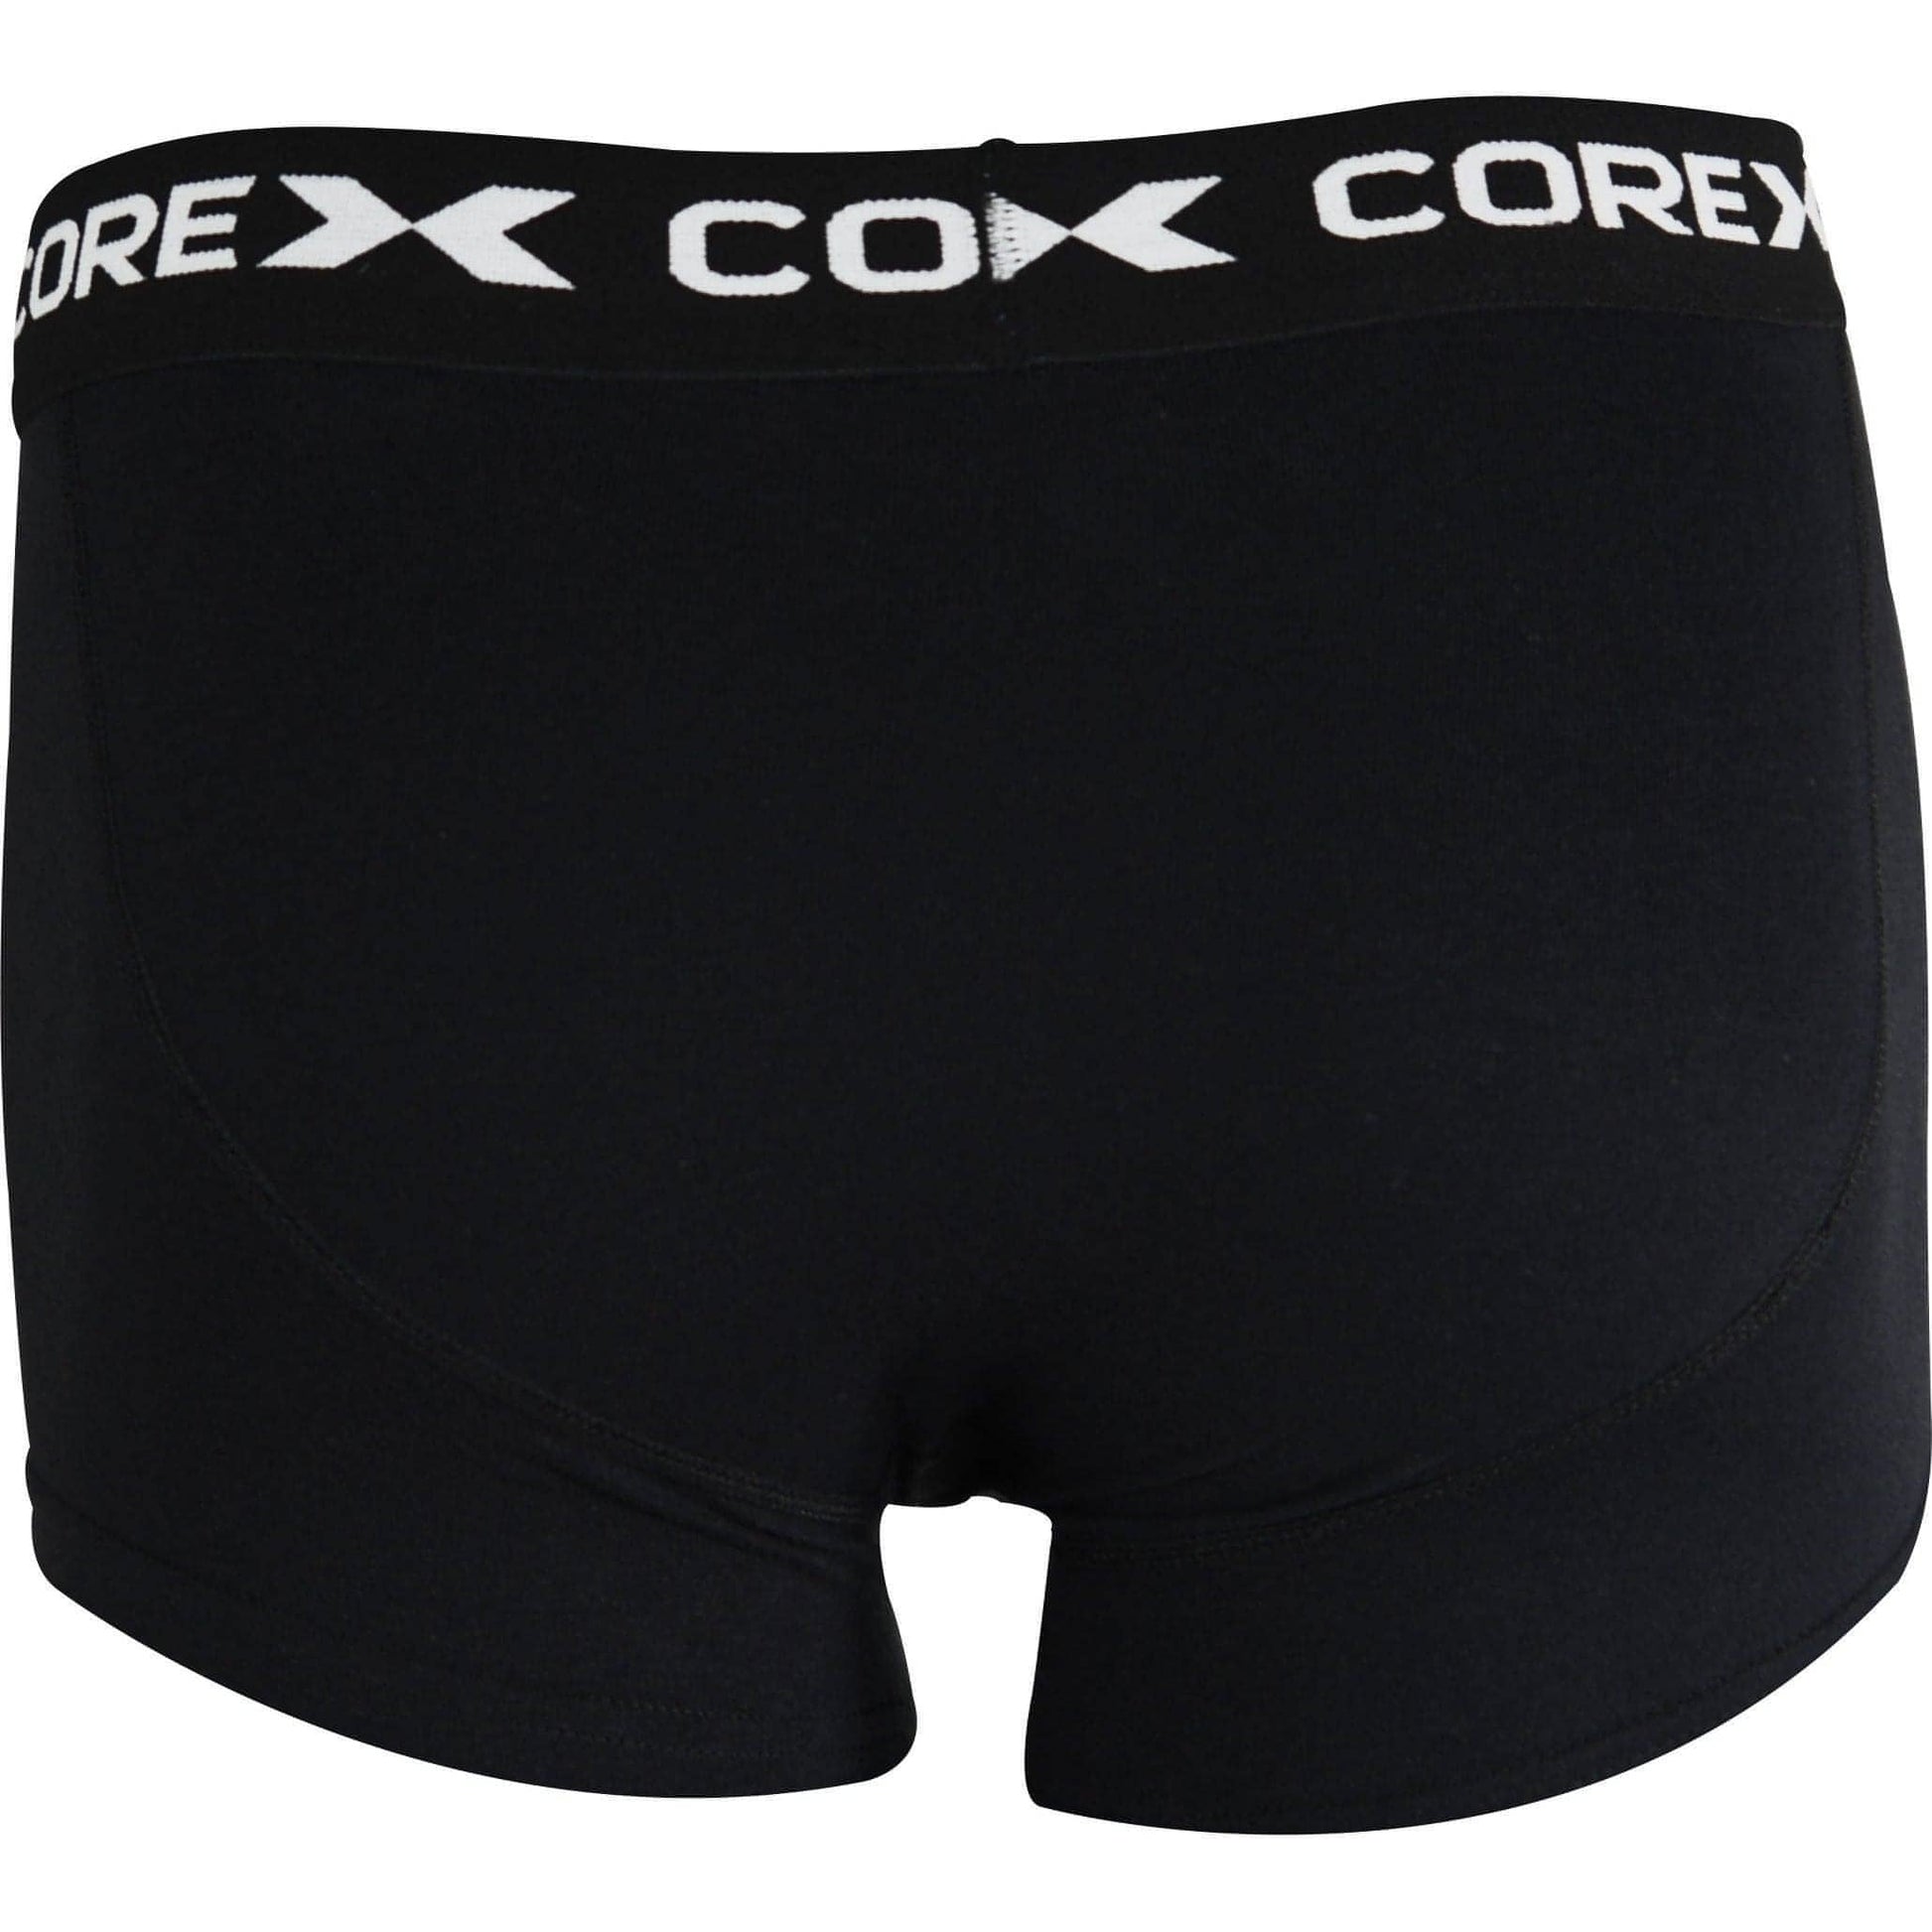 Corex Fitness Classic Pack Boxers 1P204931Wm Redblack Black Back View